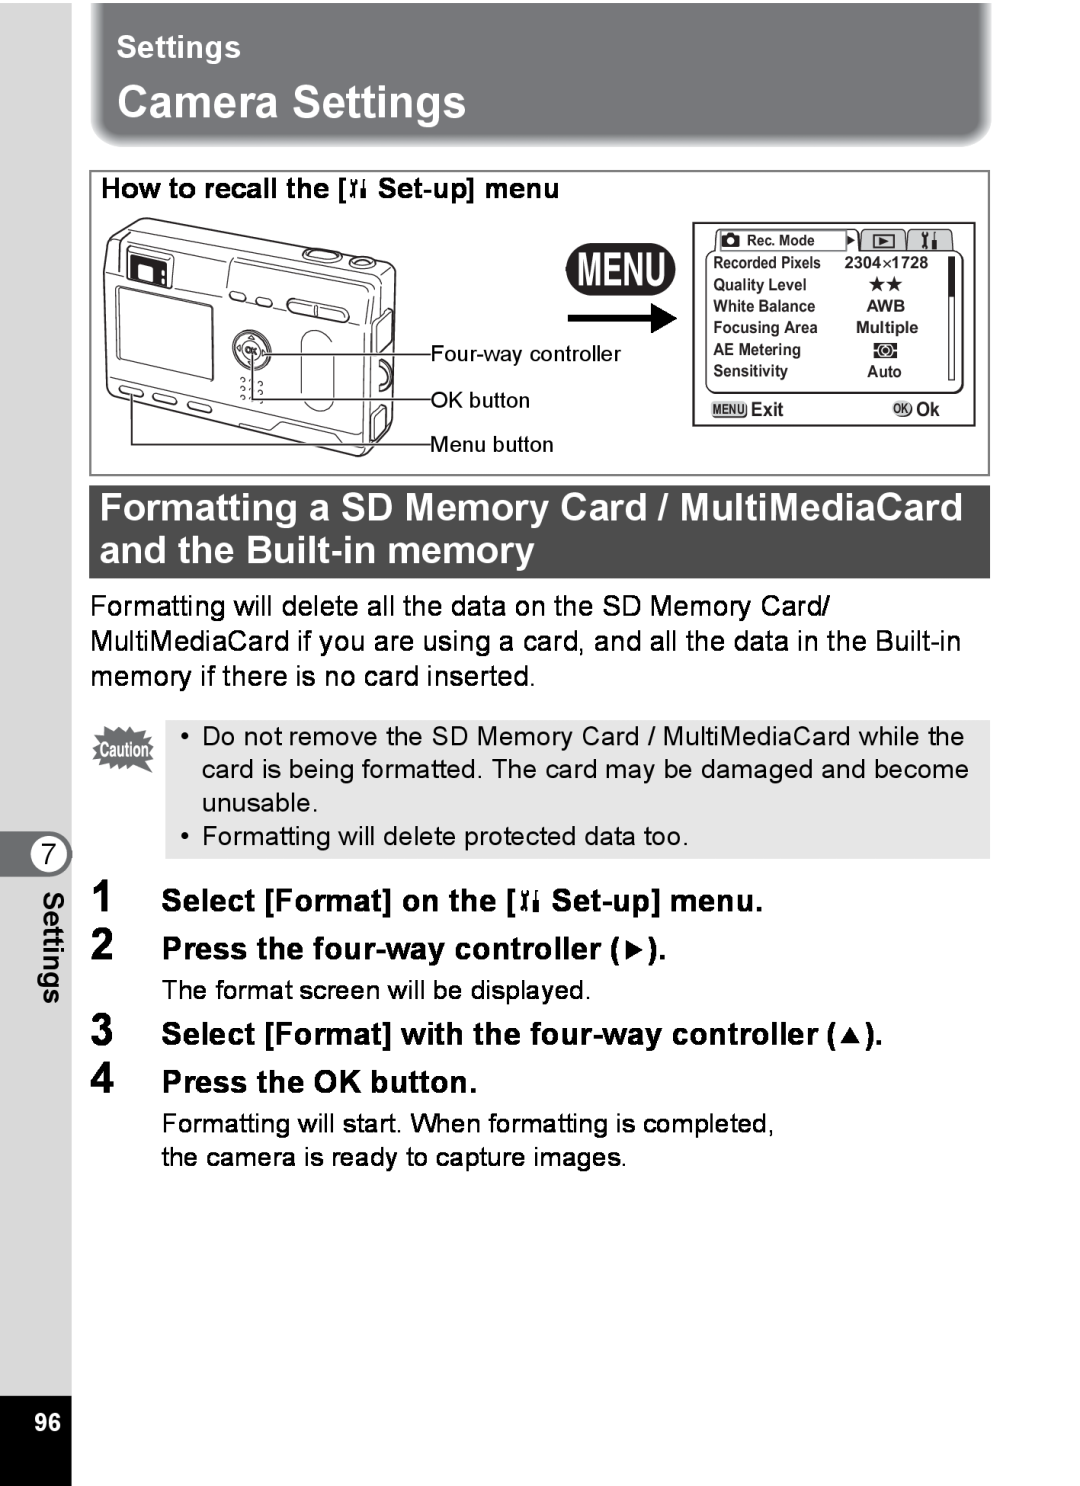 Pentax S4 manual Camera Settings, Formatting a SD Memory Card / MultiMediaCard and the Built-in memory 